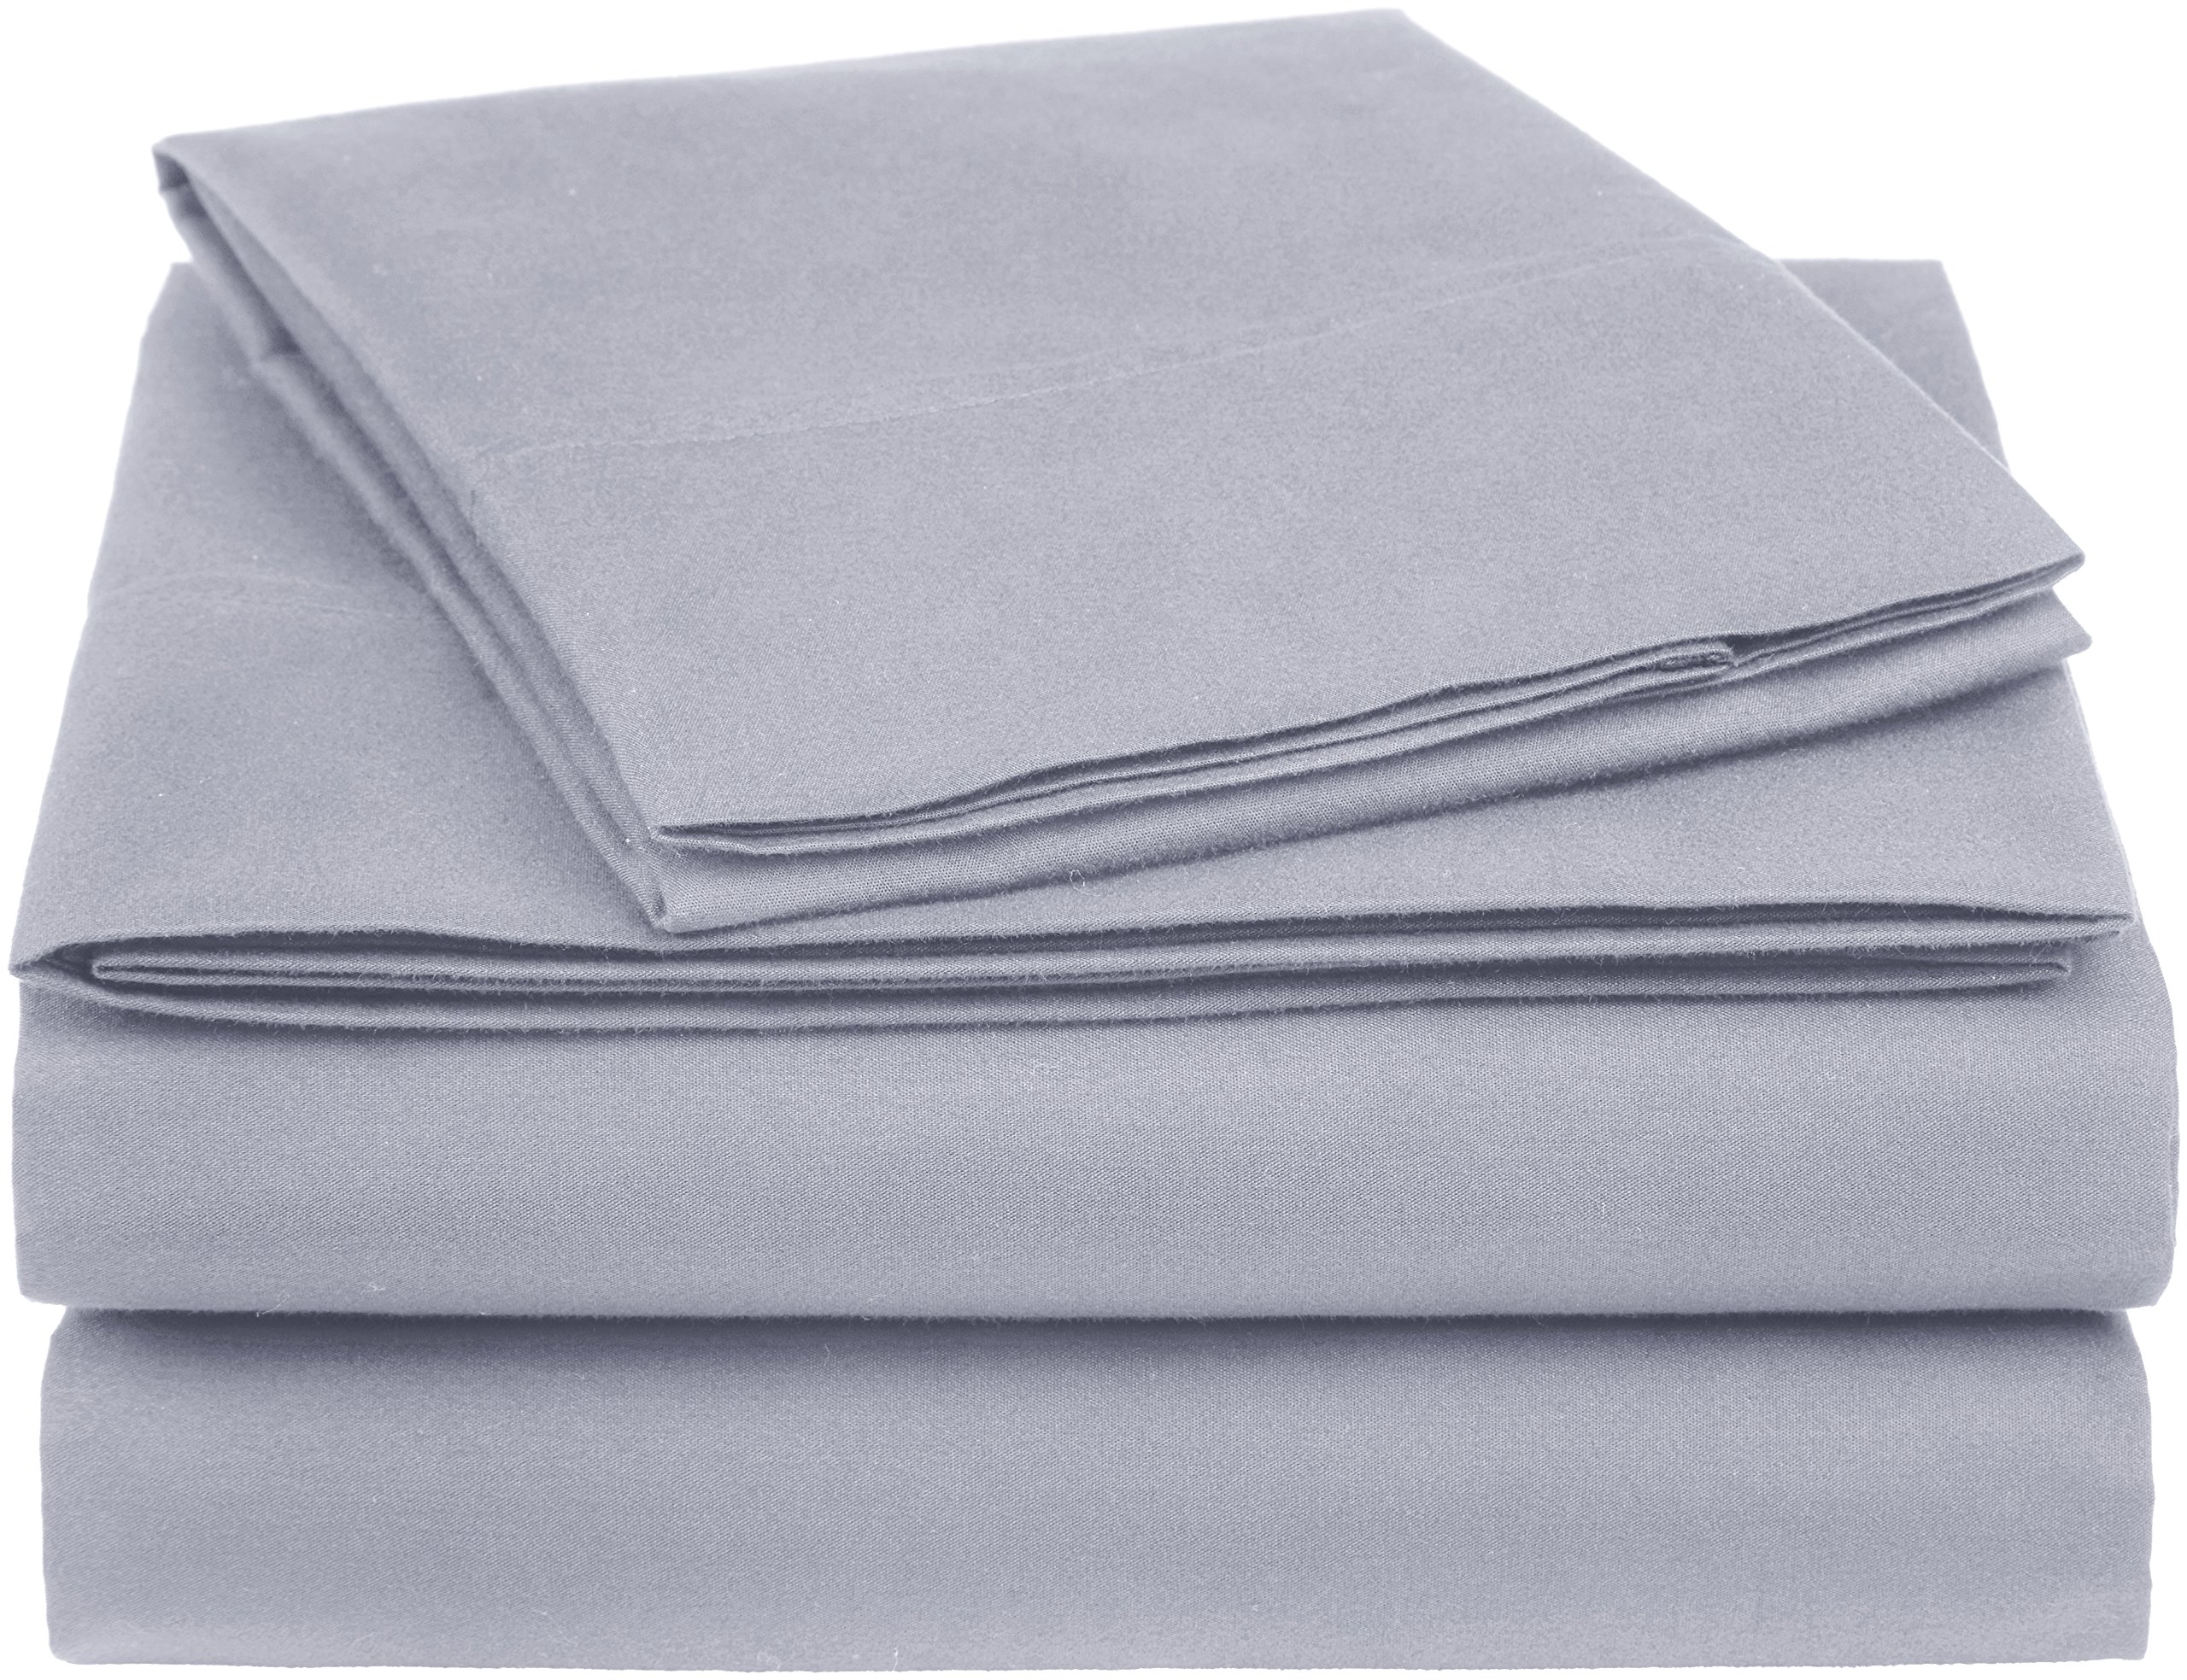 Book Cover Amazon Basics Essential Cotton Blend Bed Sheet Set,3 pcs, Twin, Dark Grey Dark Grey Twin